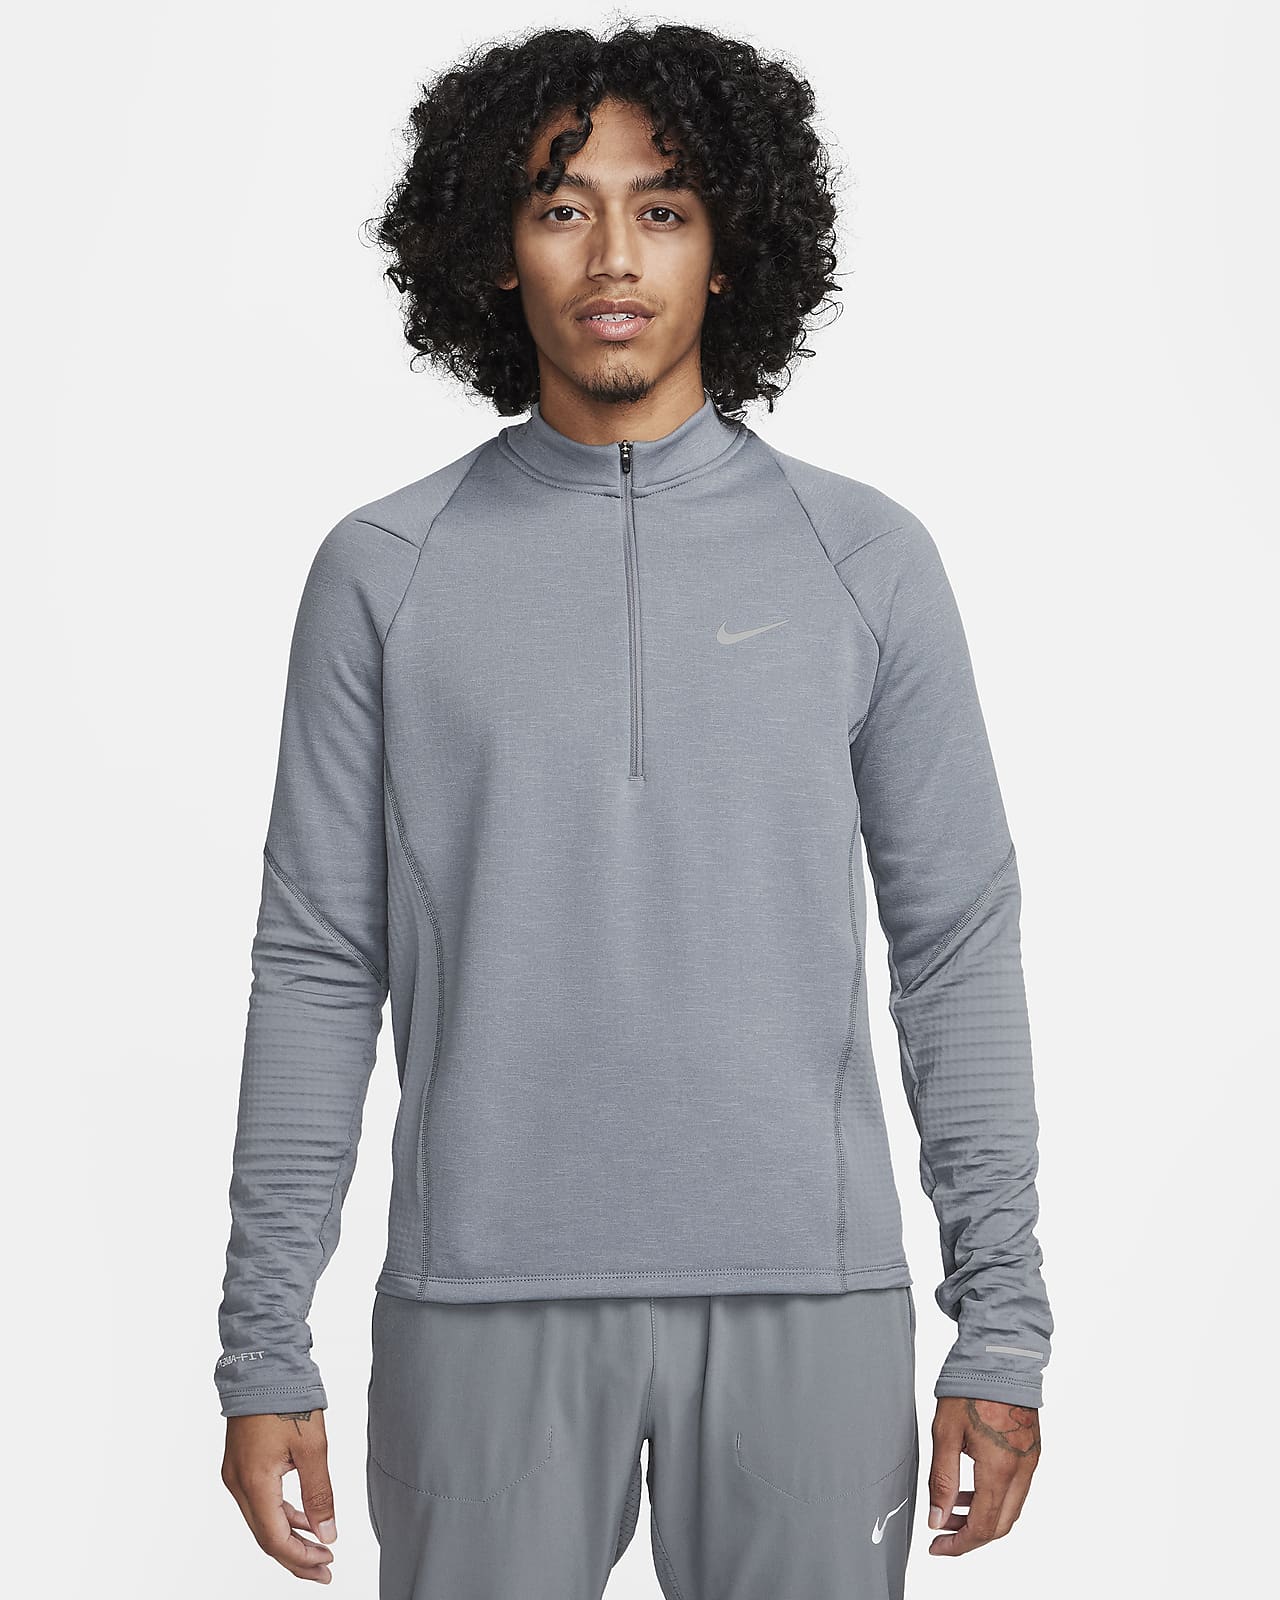 Nike Men's Trail Run Element 1/2 Zip Long Sleeve Top